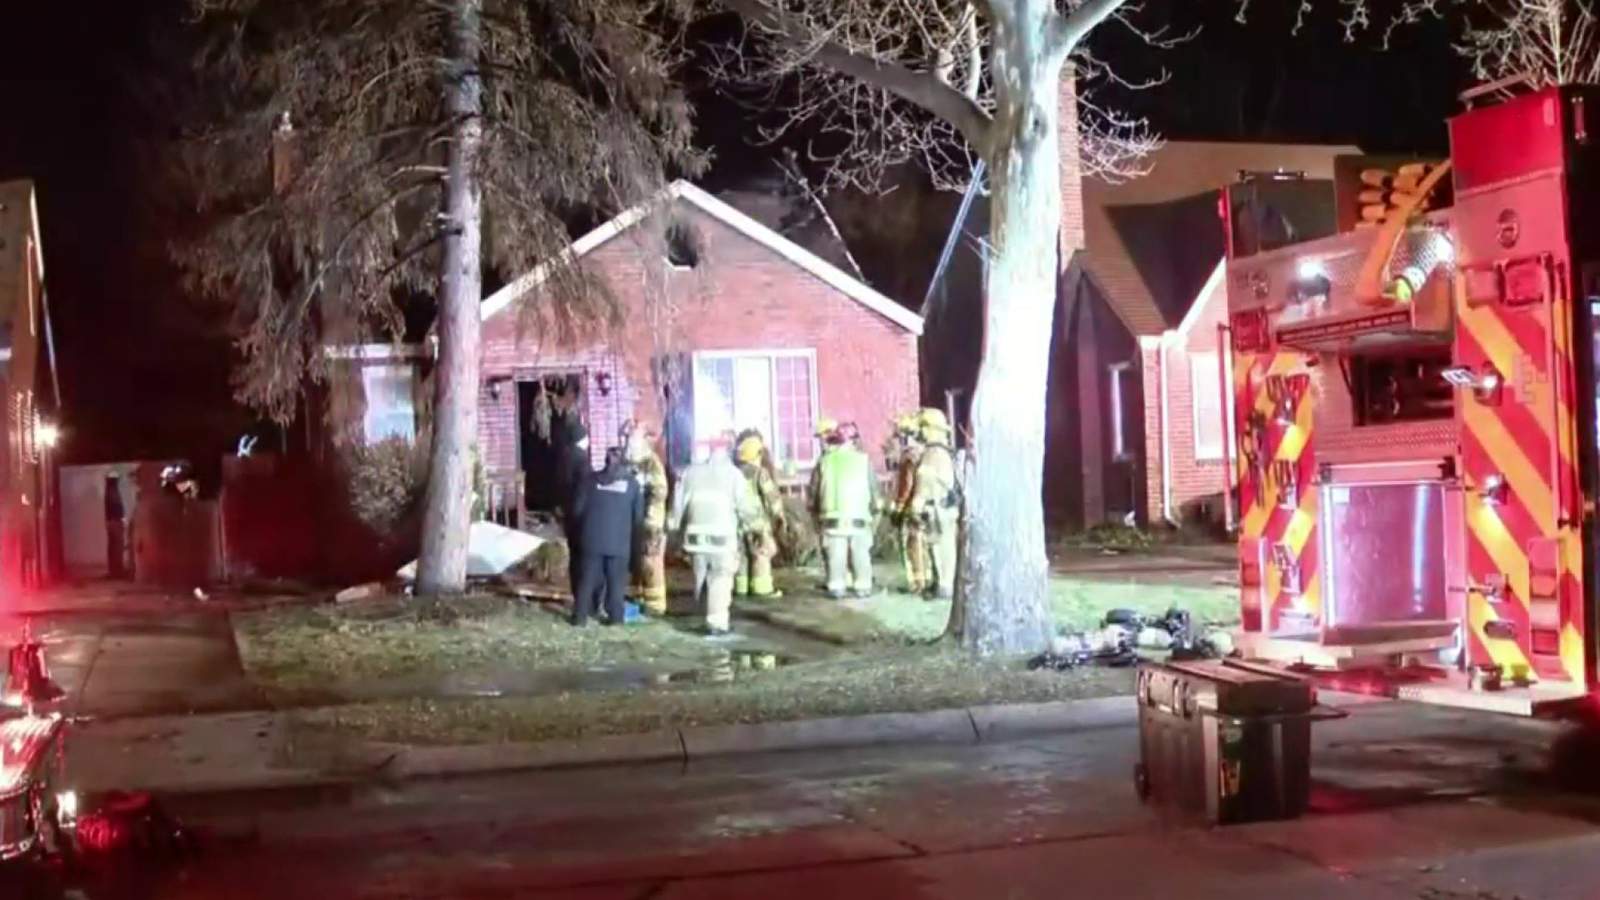 Man killed in Harper Woods house fire